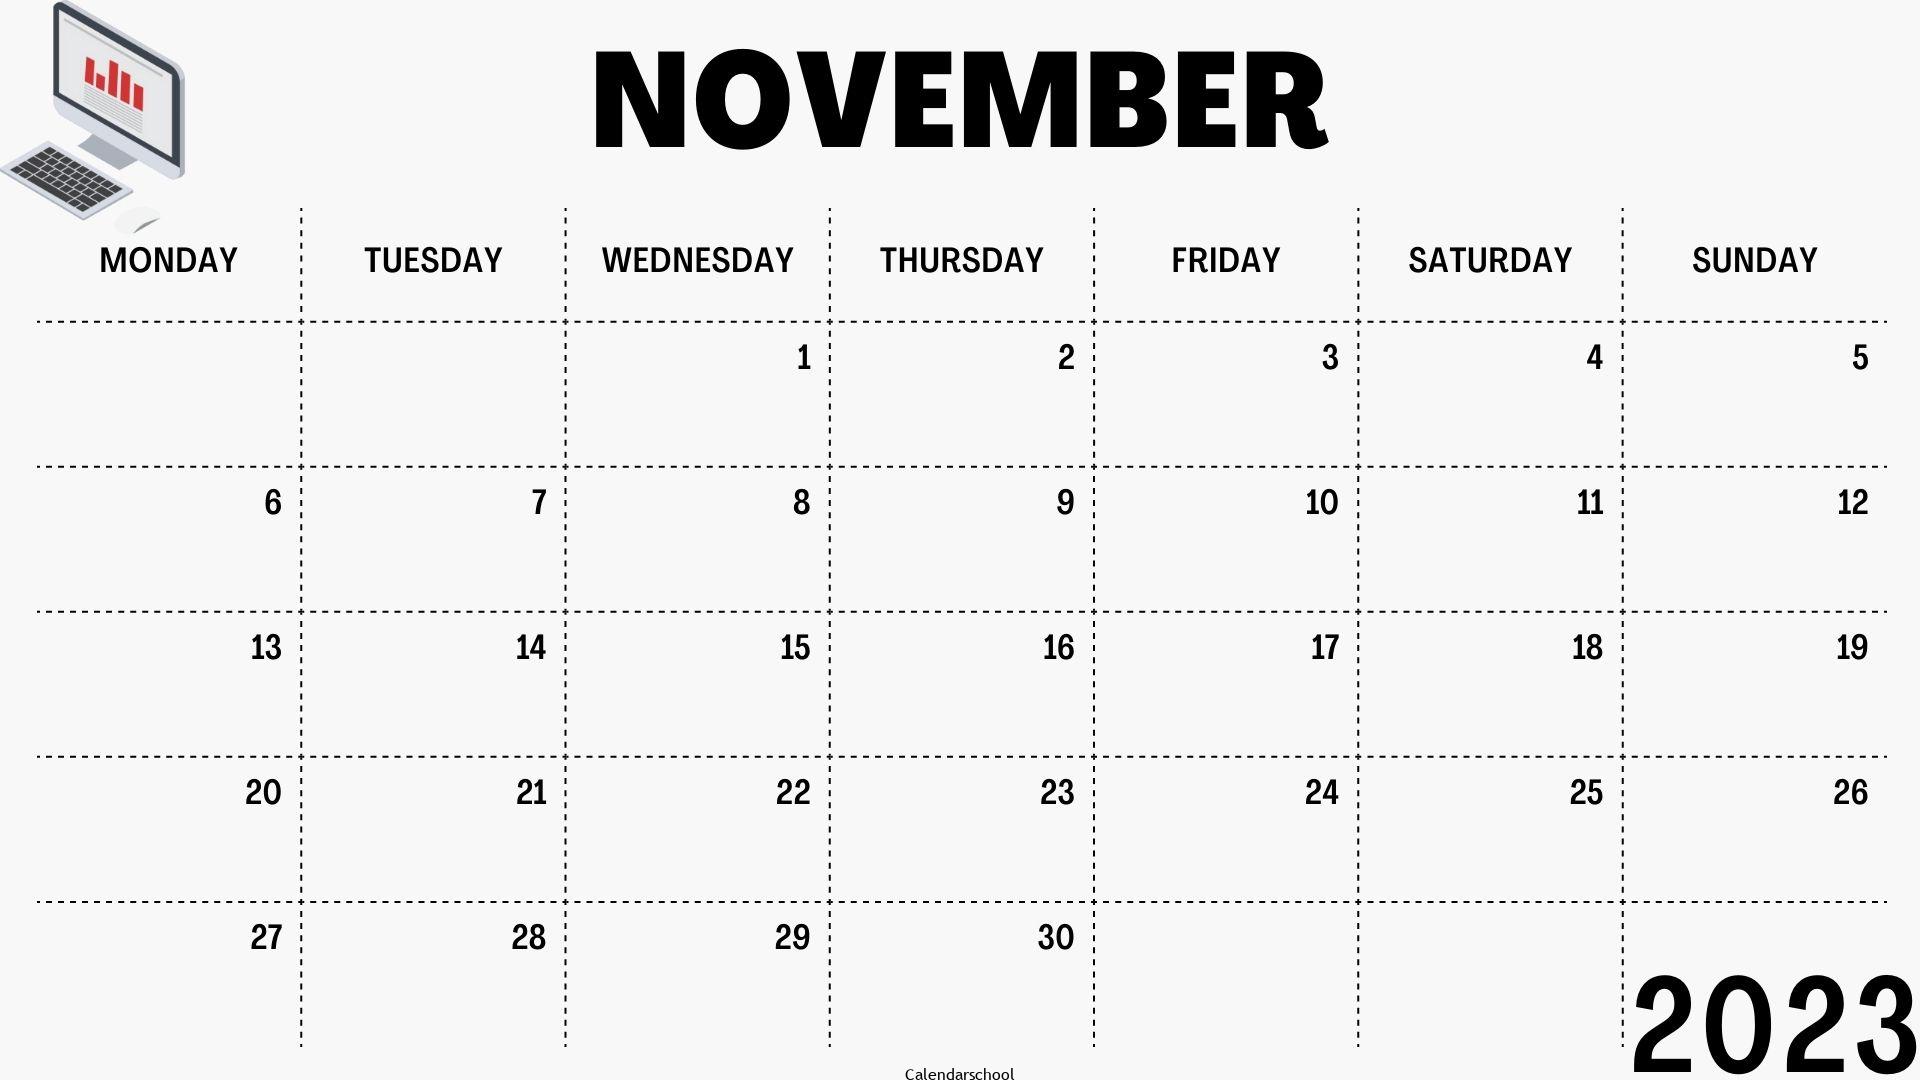 November 2023 Blank Notion Calendar